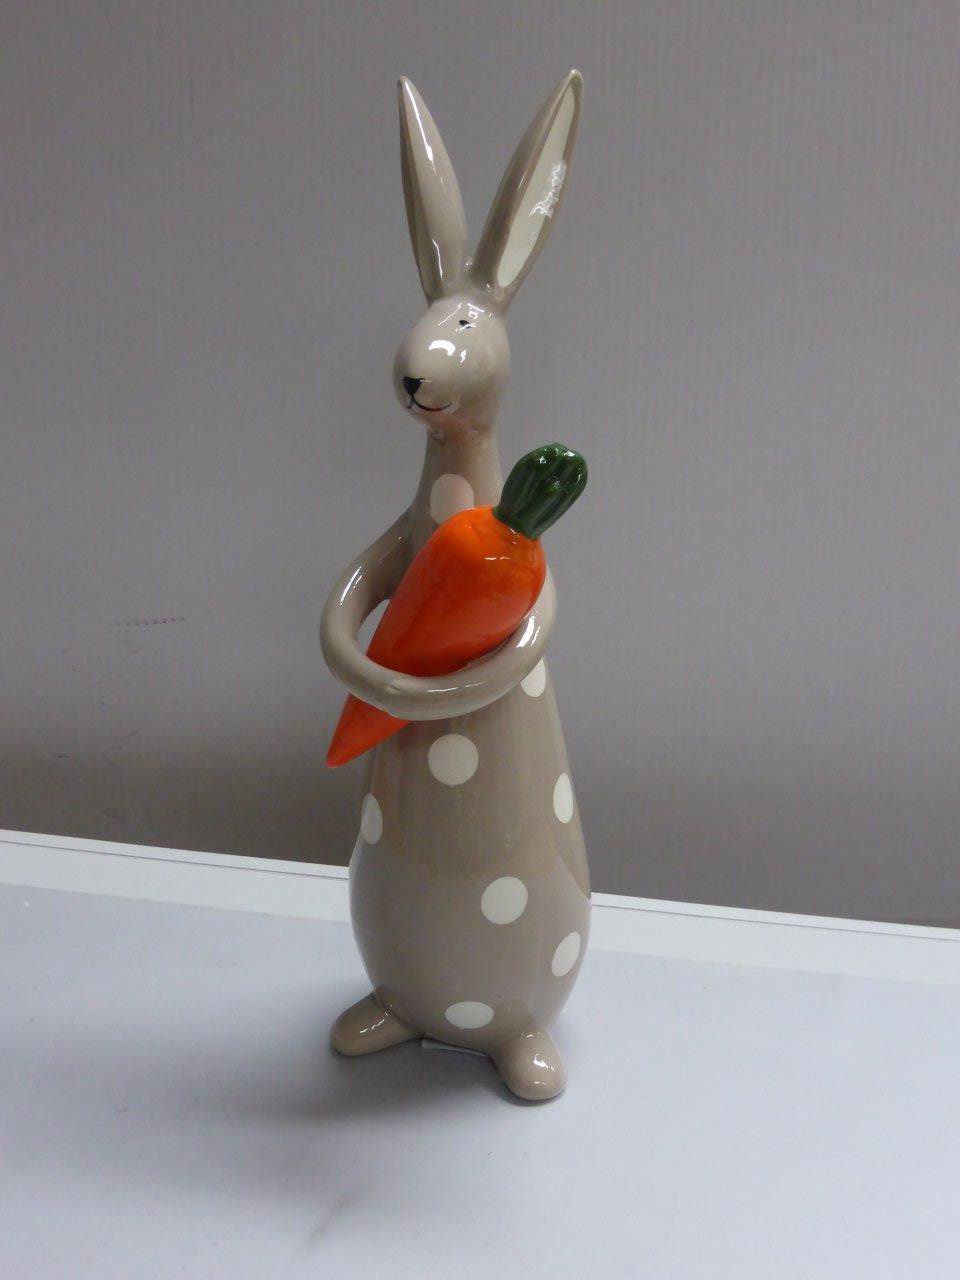 Hasenfigur mit Karotte, Keramikhase zur Frühlingsdekoration